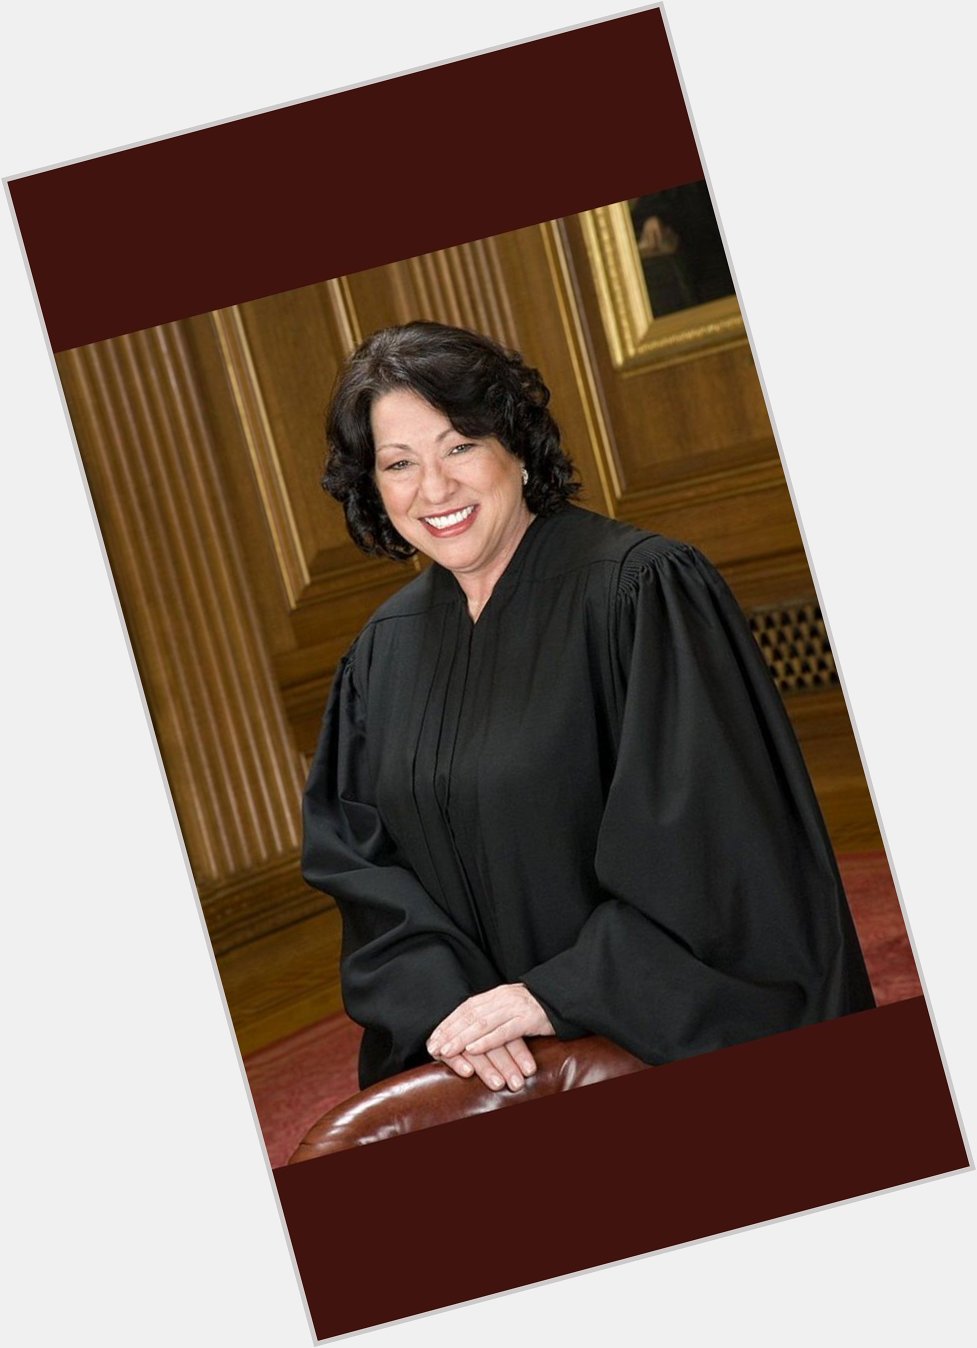 Happy Birthday to U.S. Supreme Court Justice Sonia Sotomayor! 